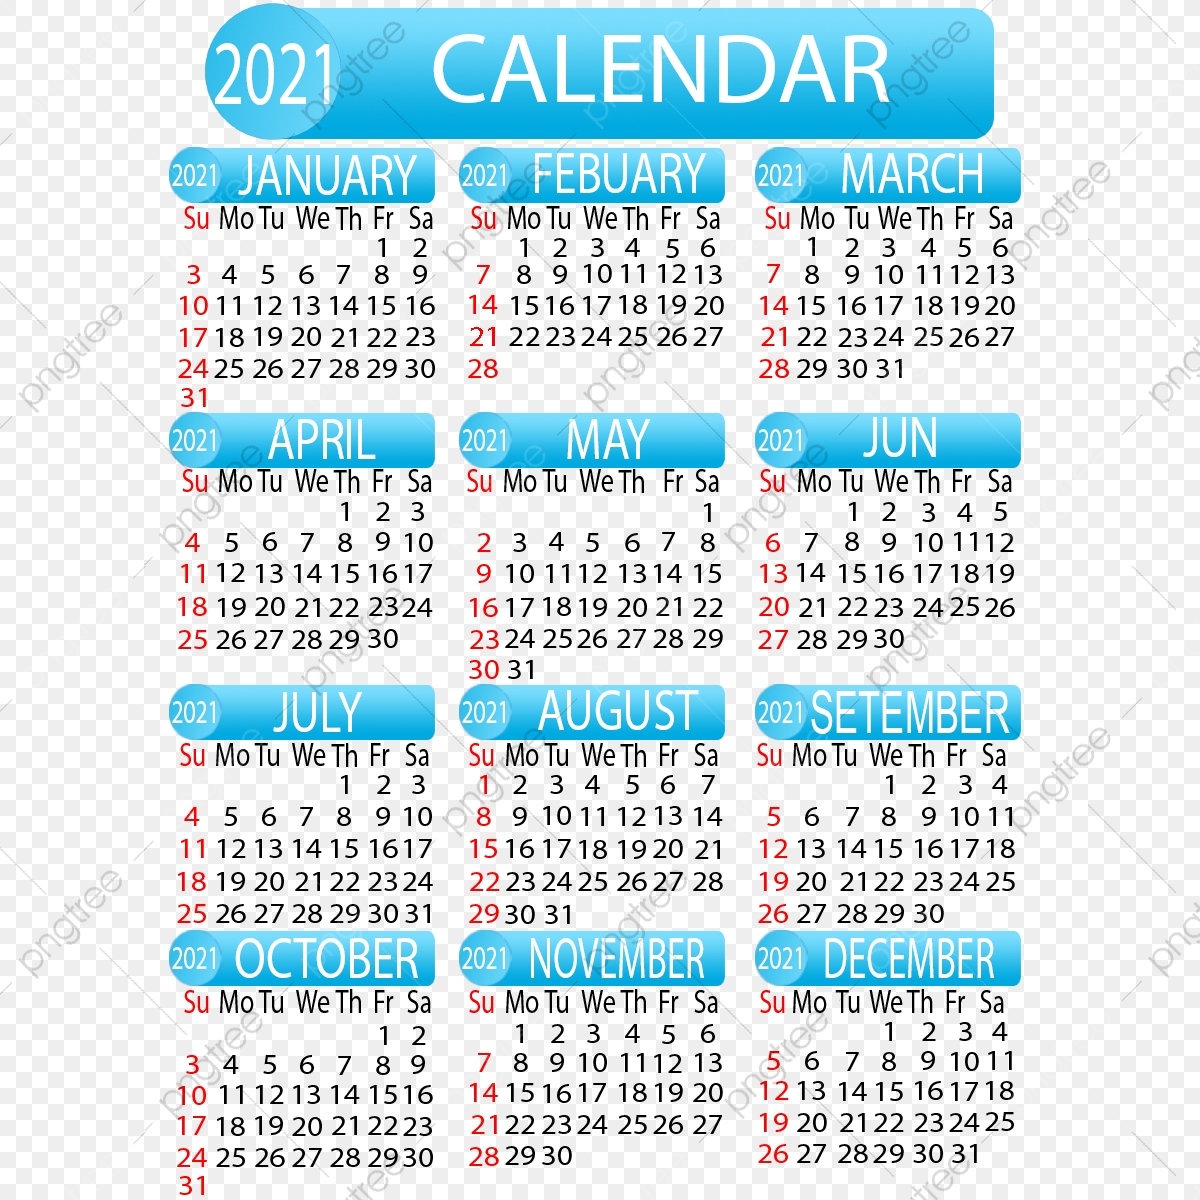 Time And Date Calendar 2021 - Calendar2021